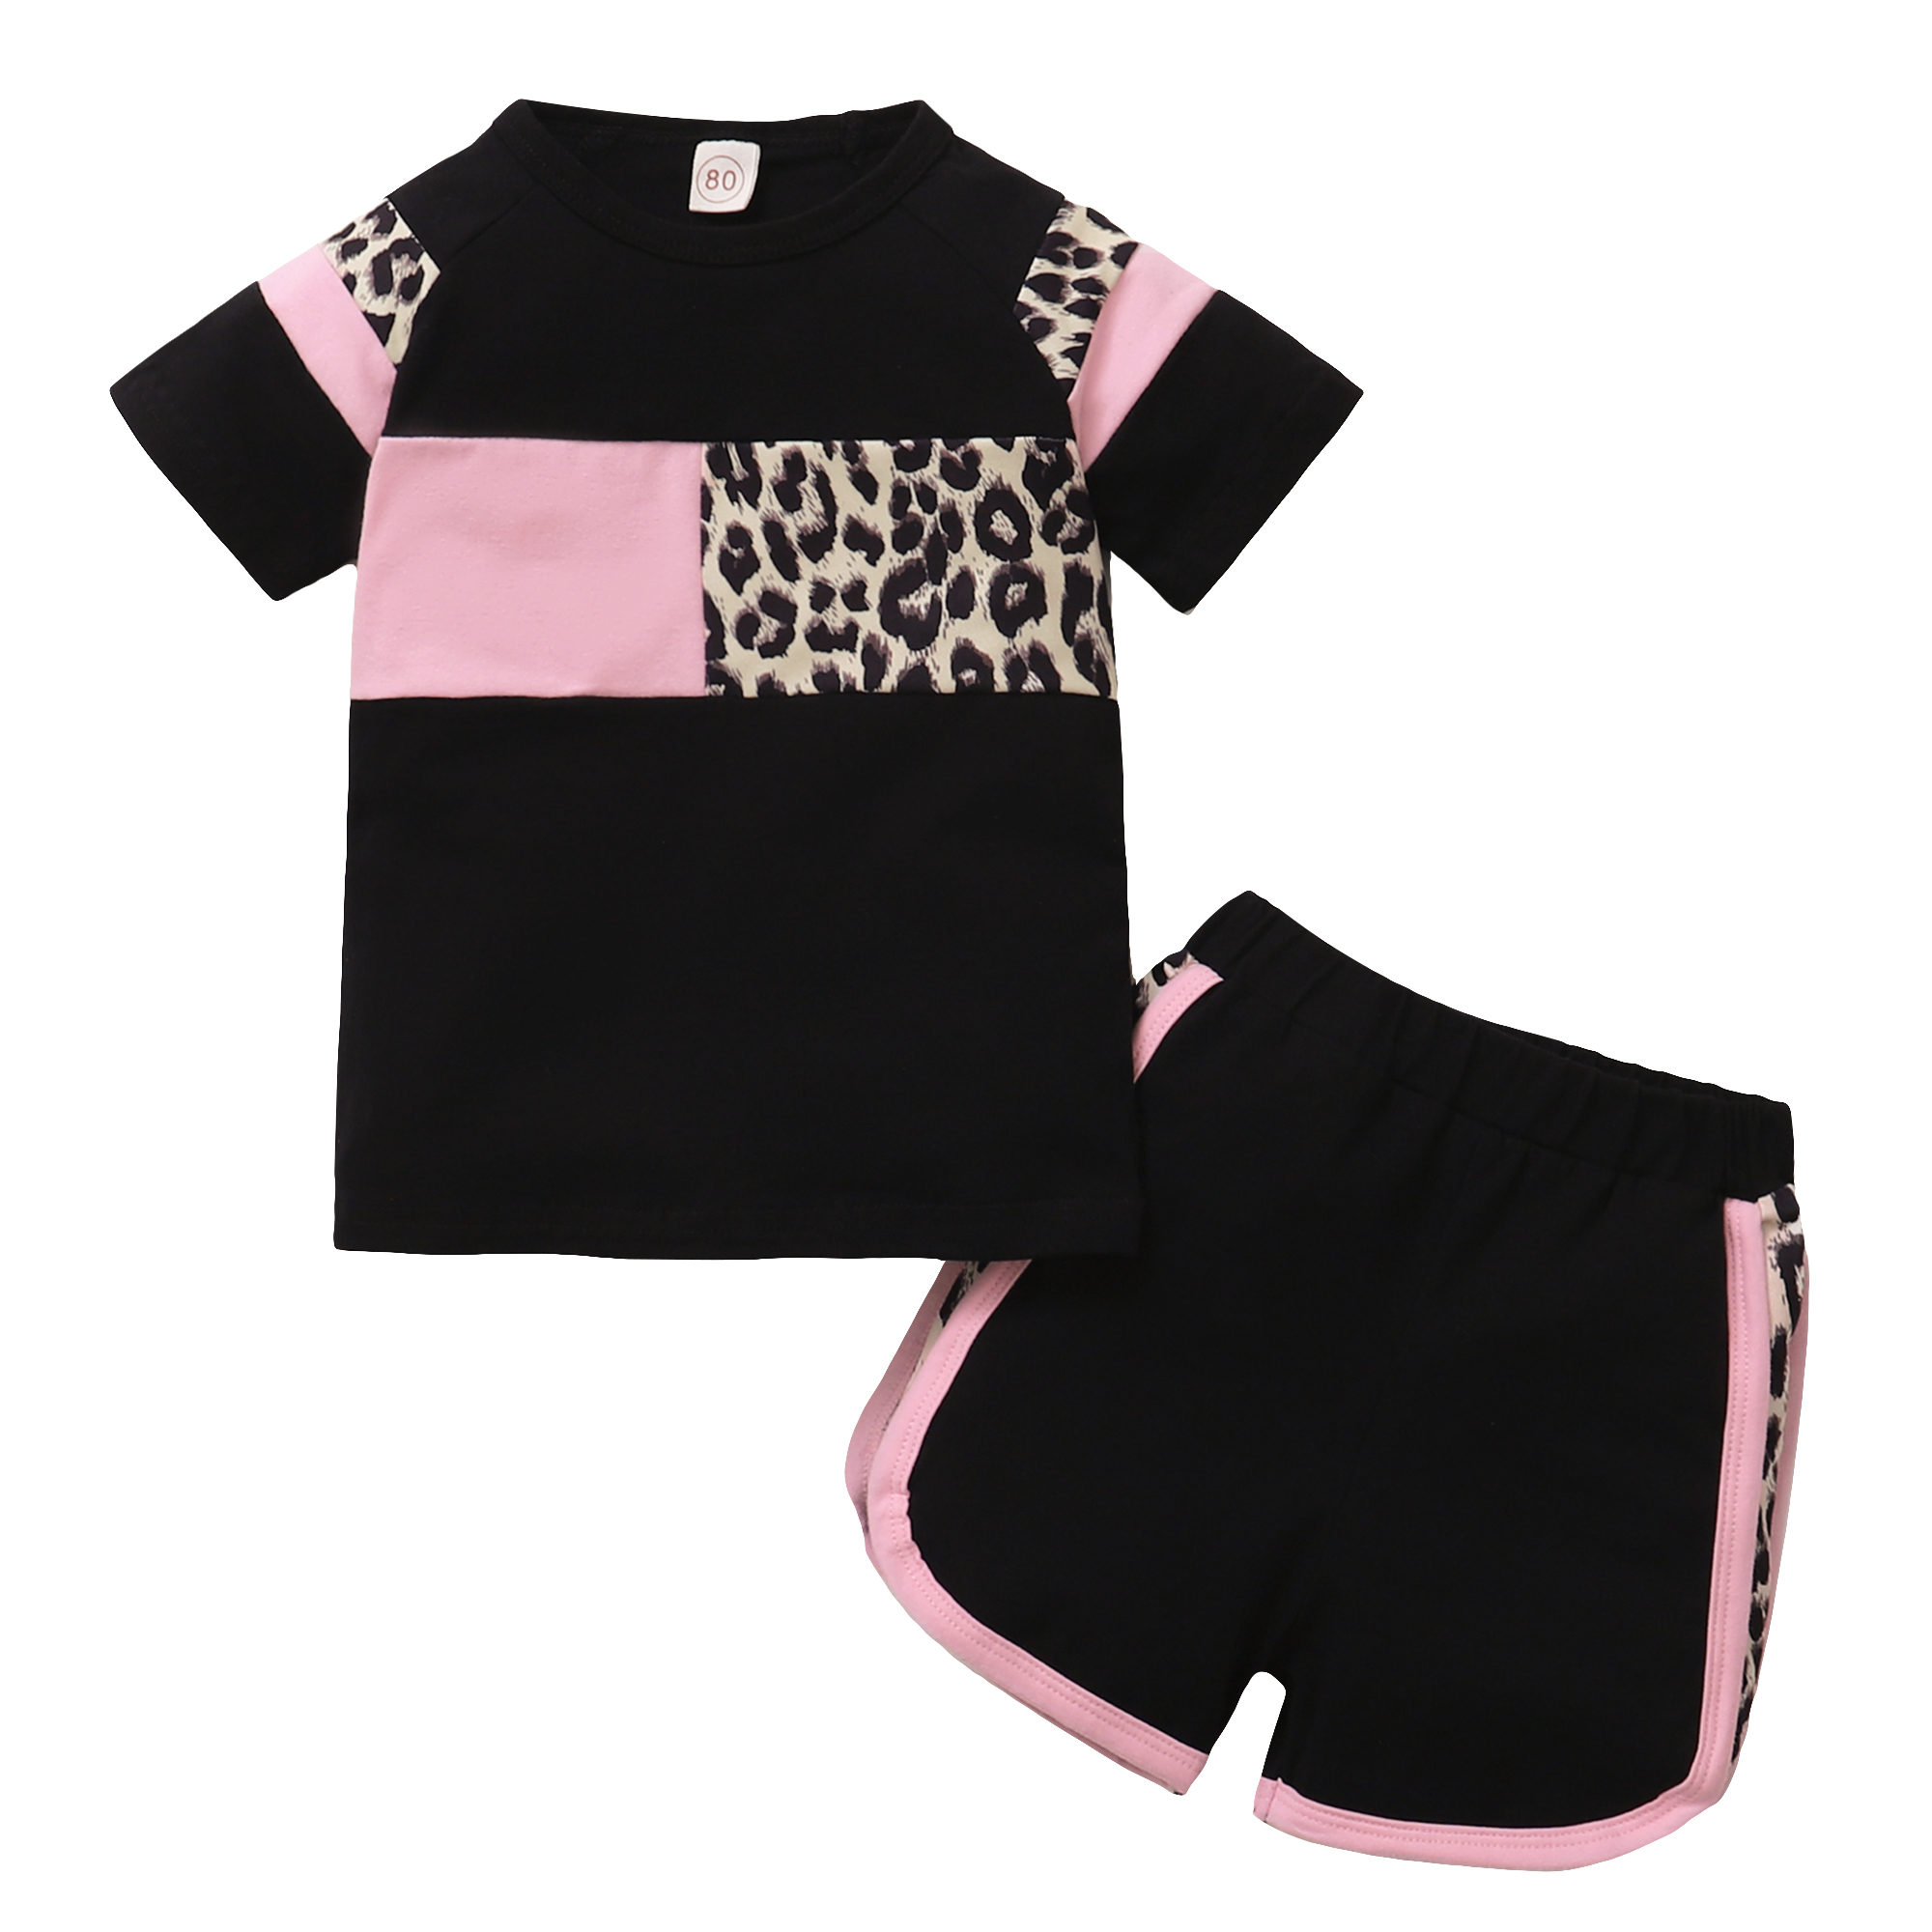 3T Girls Clothes Kids Girl Summer Outfit Leopard Shirt Shorts Set Little Girl Clothing Toddler Girl Outfit 2-3T Girls Clothes Black - image 1 of 7